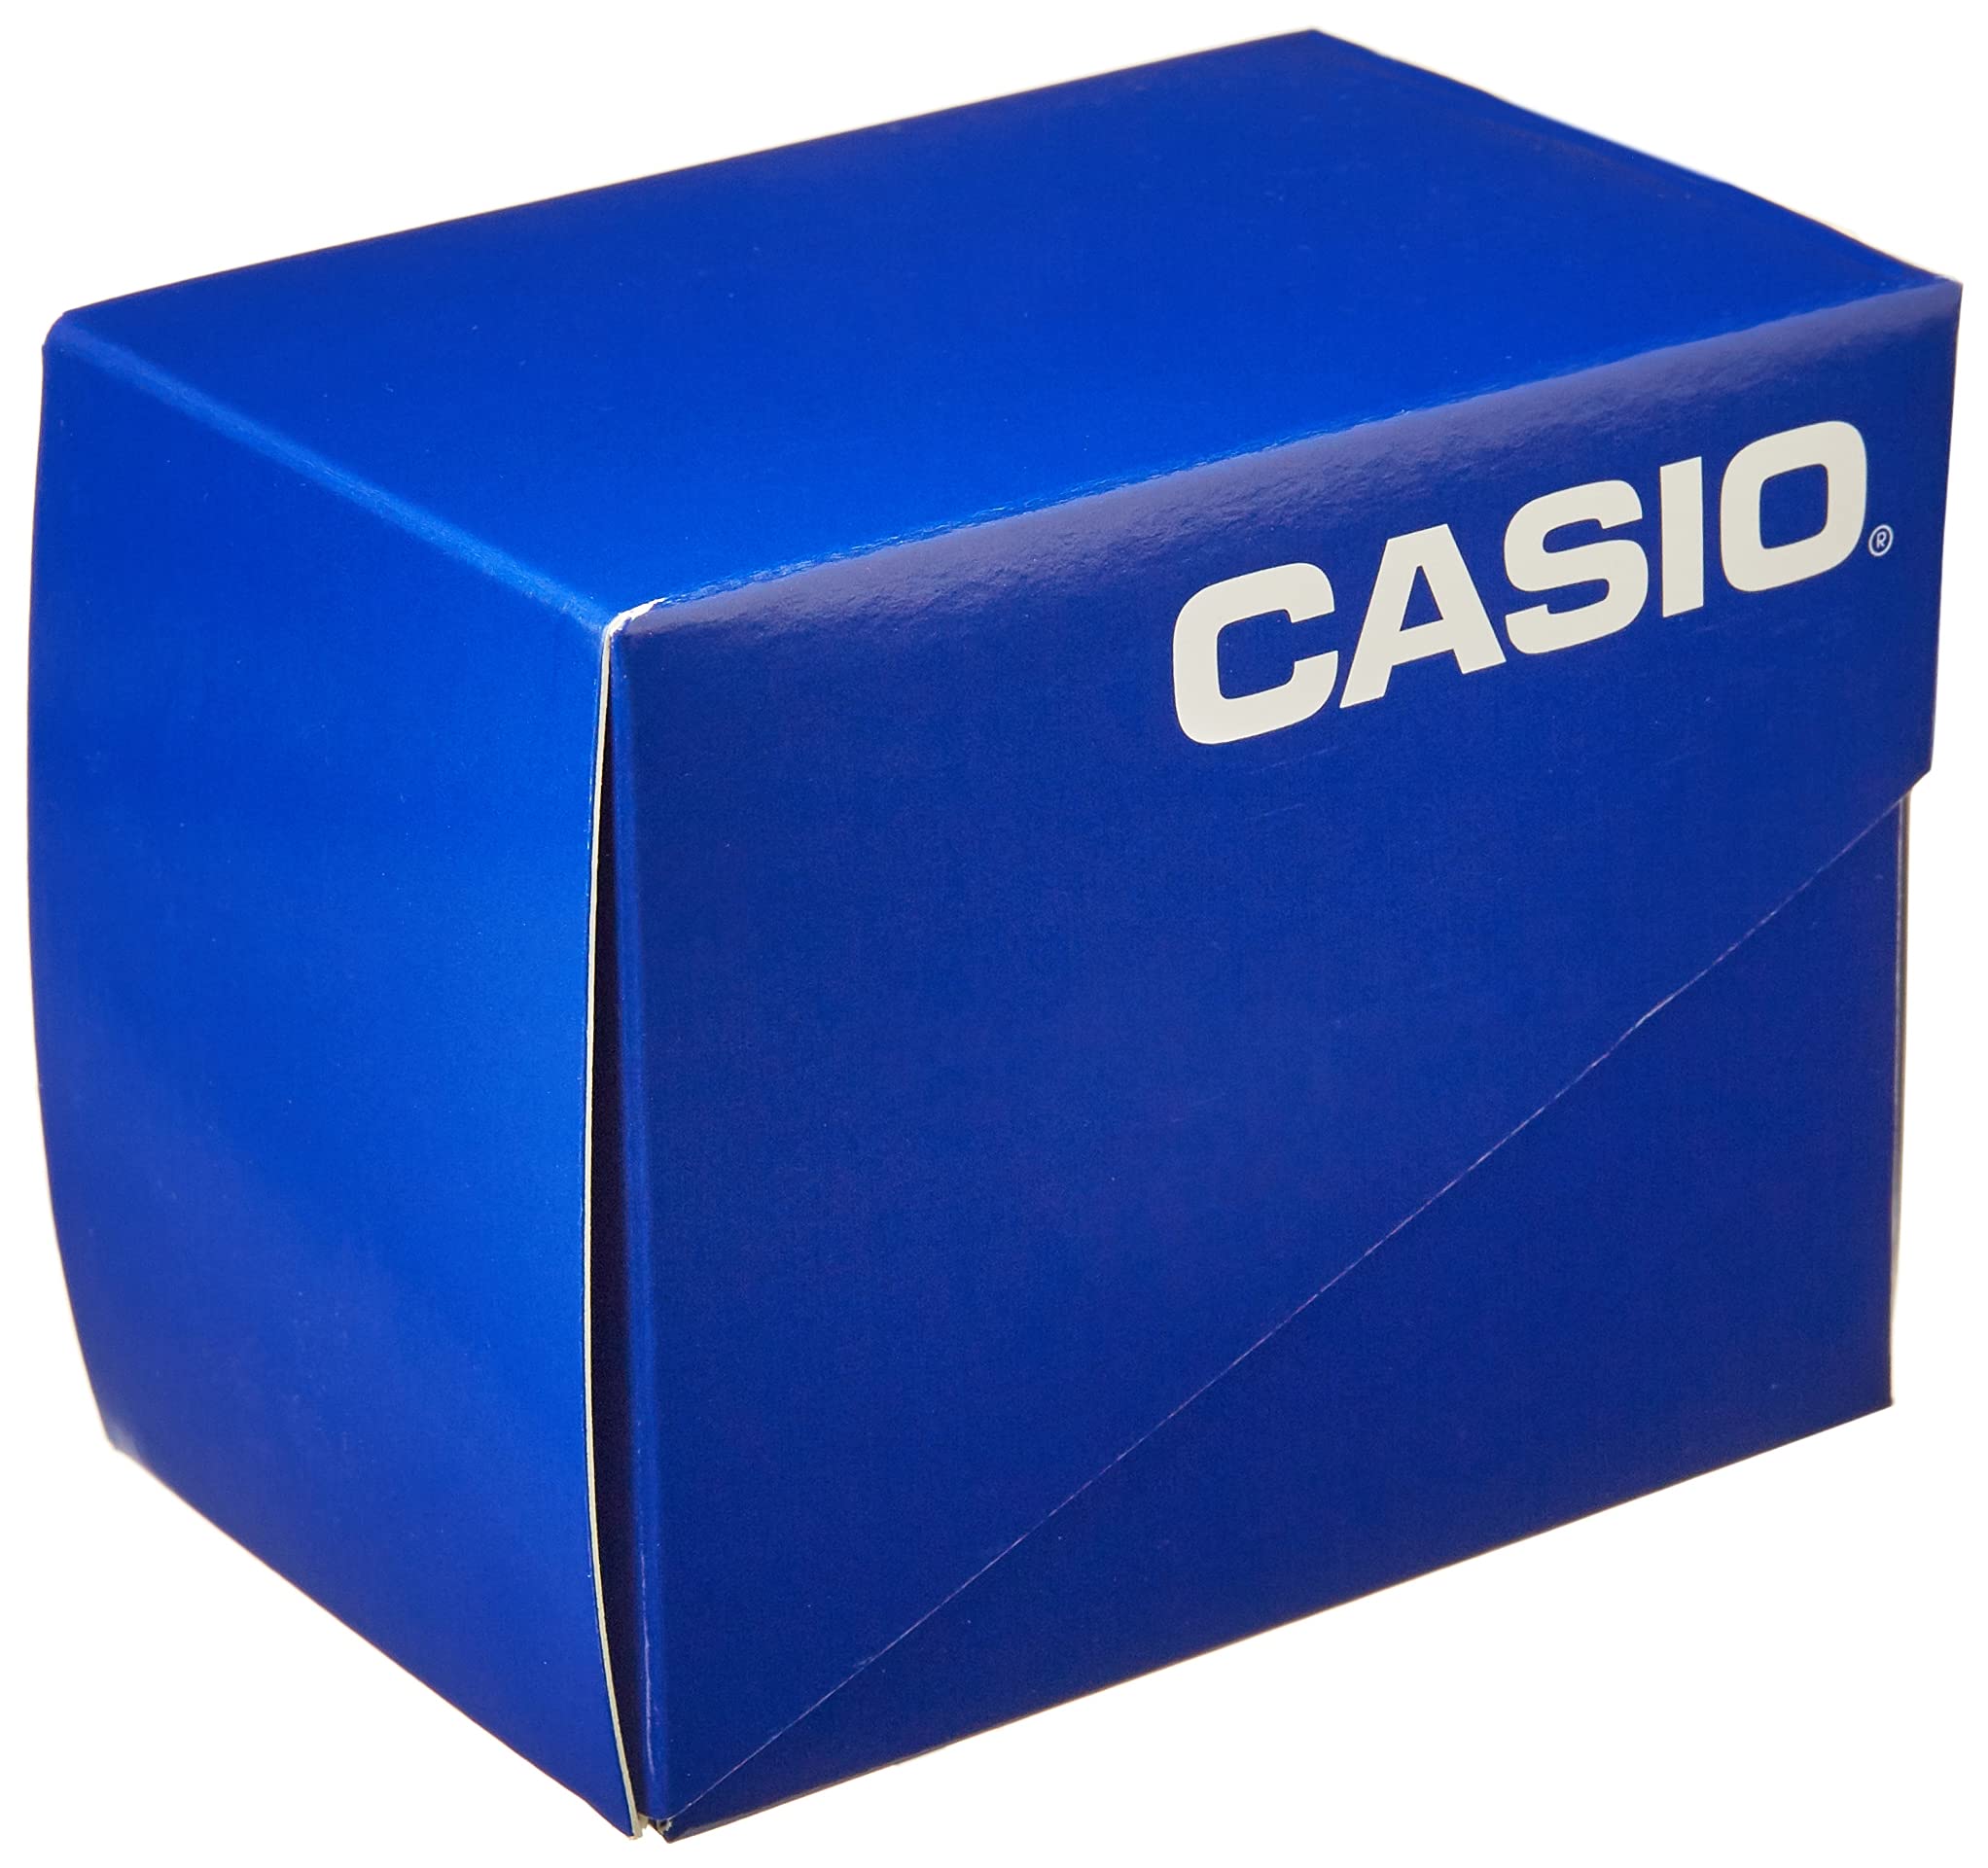 Casio Outdoor Velcro Band